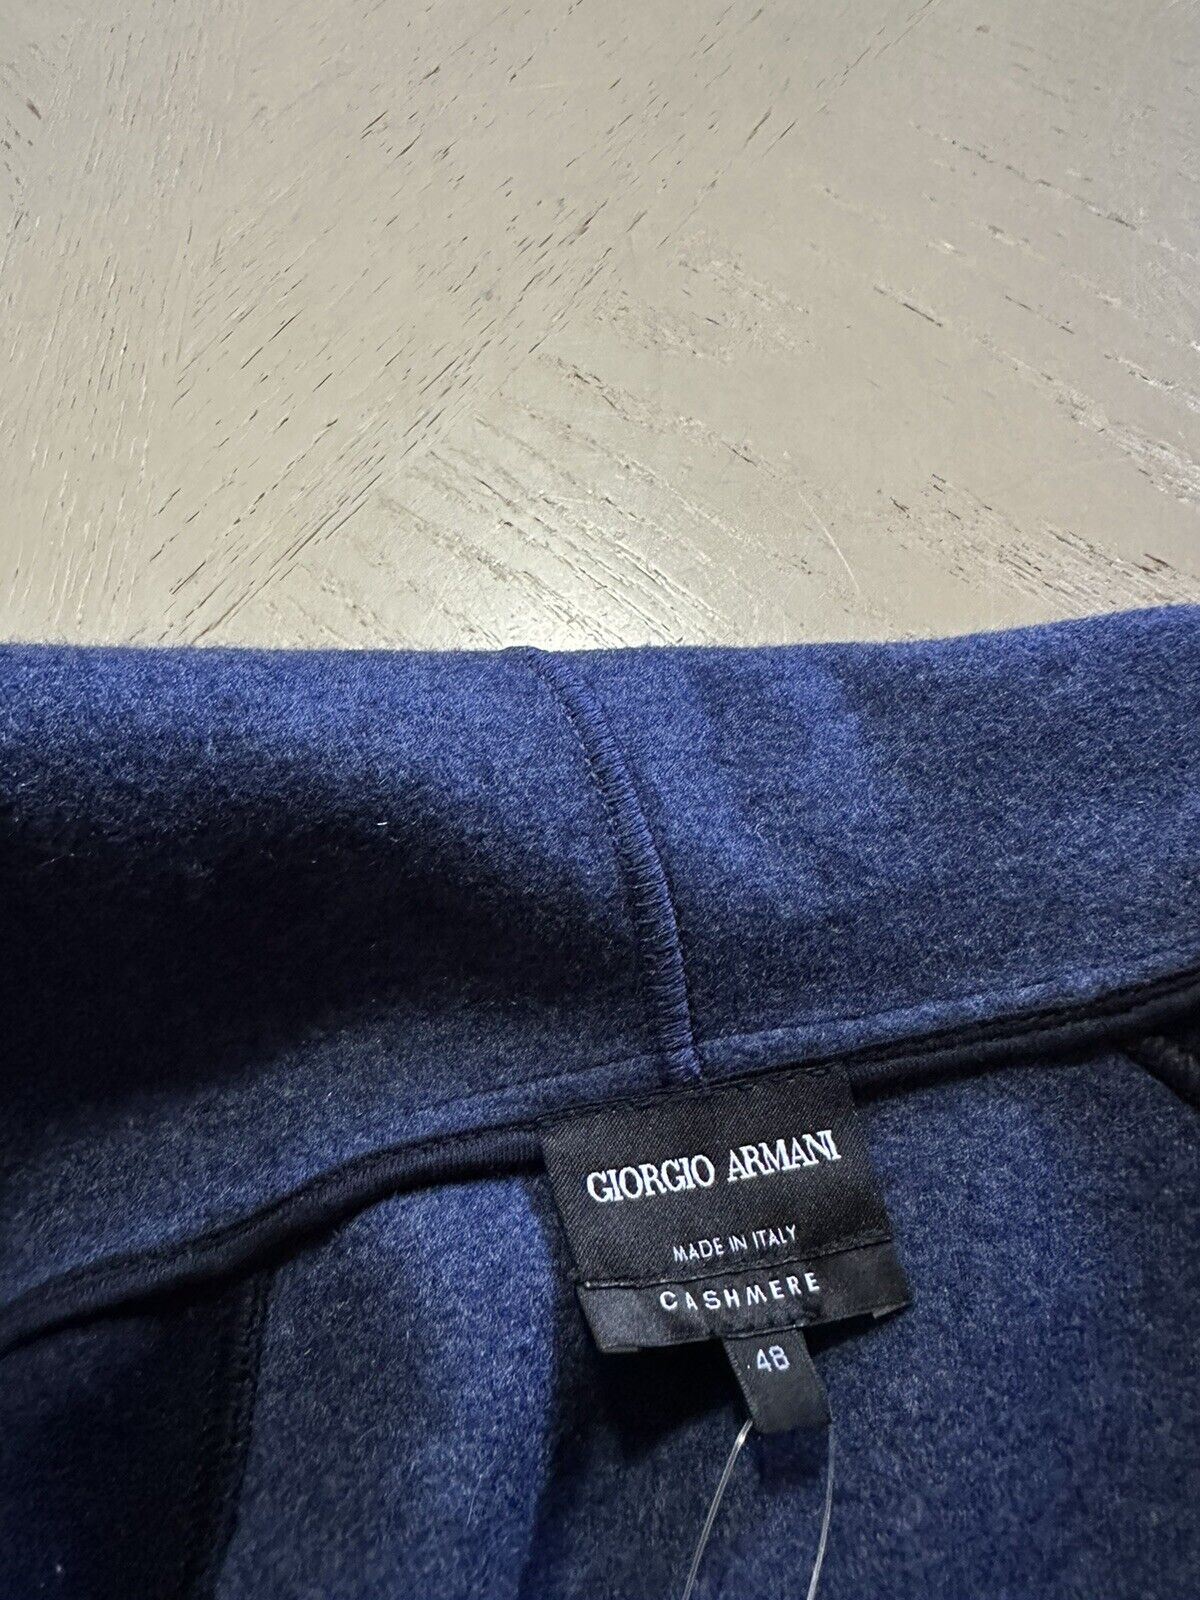 New $7690 Giorgio Armani Men Cashmere Track Suit Color Navy 38 US/48 Eu Italy